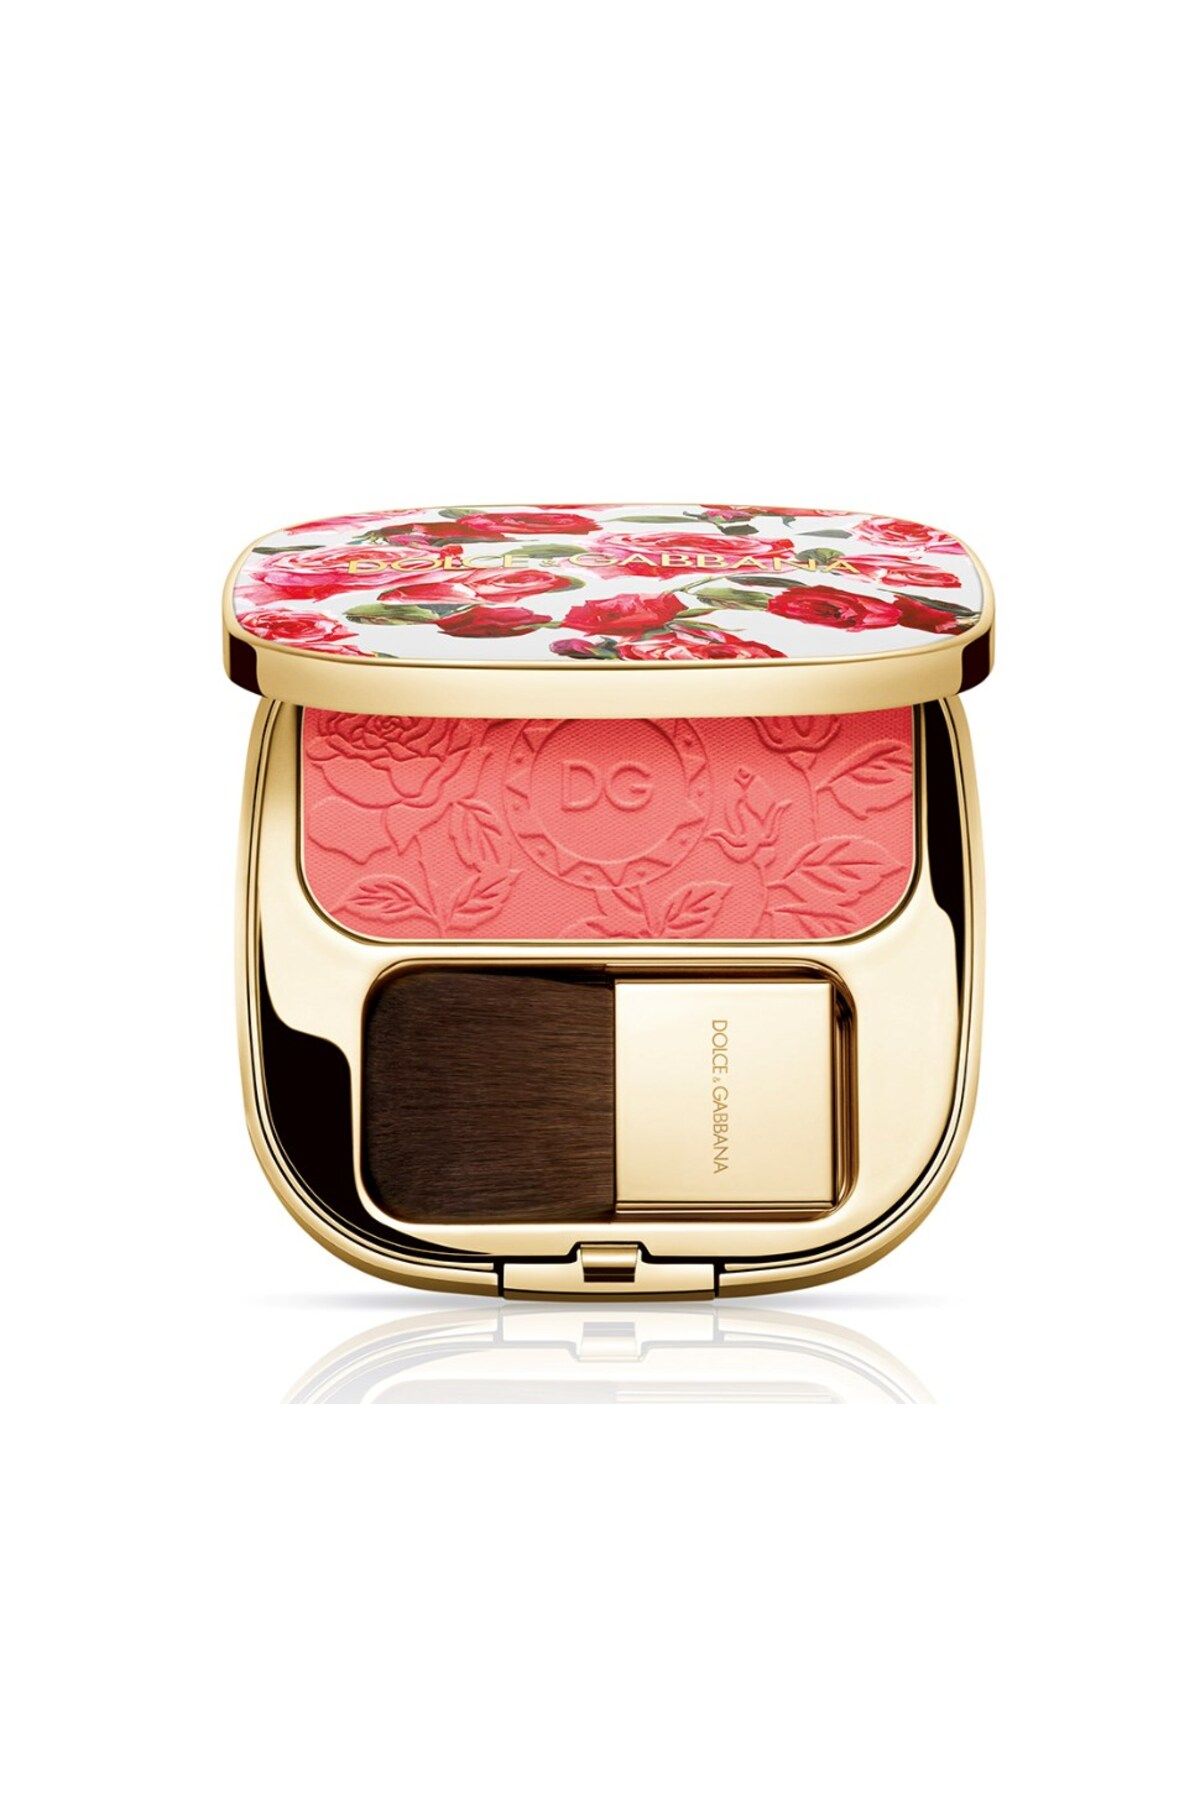 Dolce &Gabbana Blush Of Roses Powder Coral 420 5G